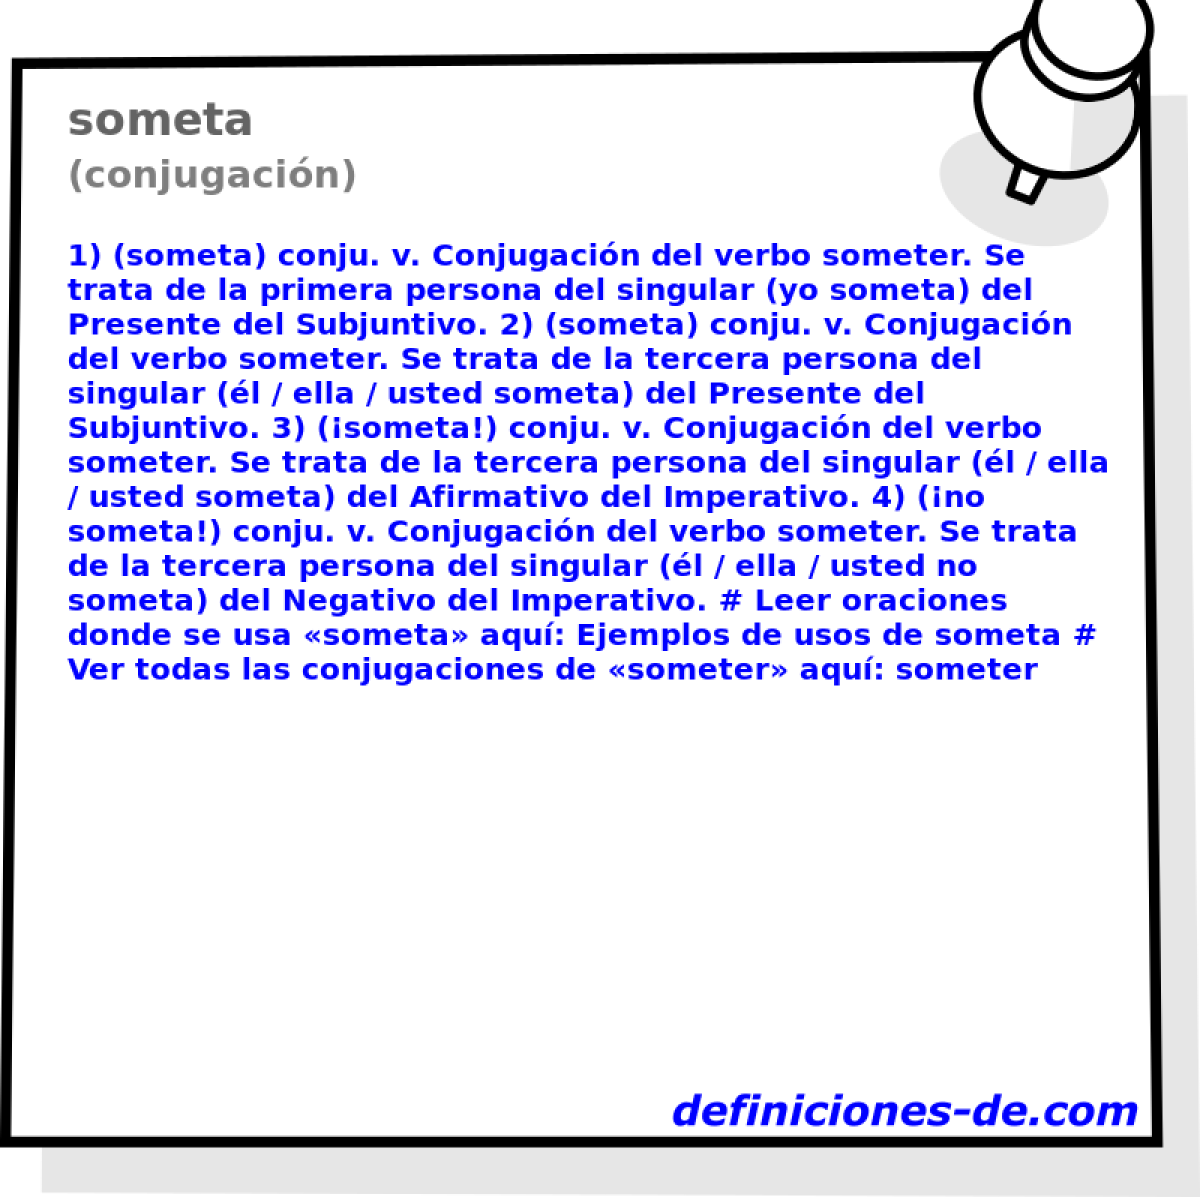 someta (conjugacin)